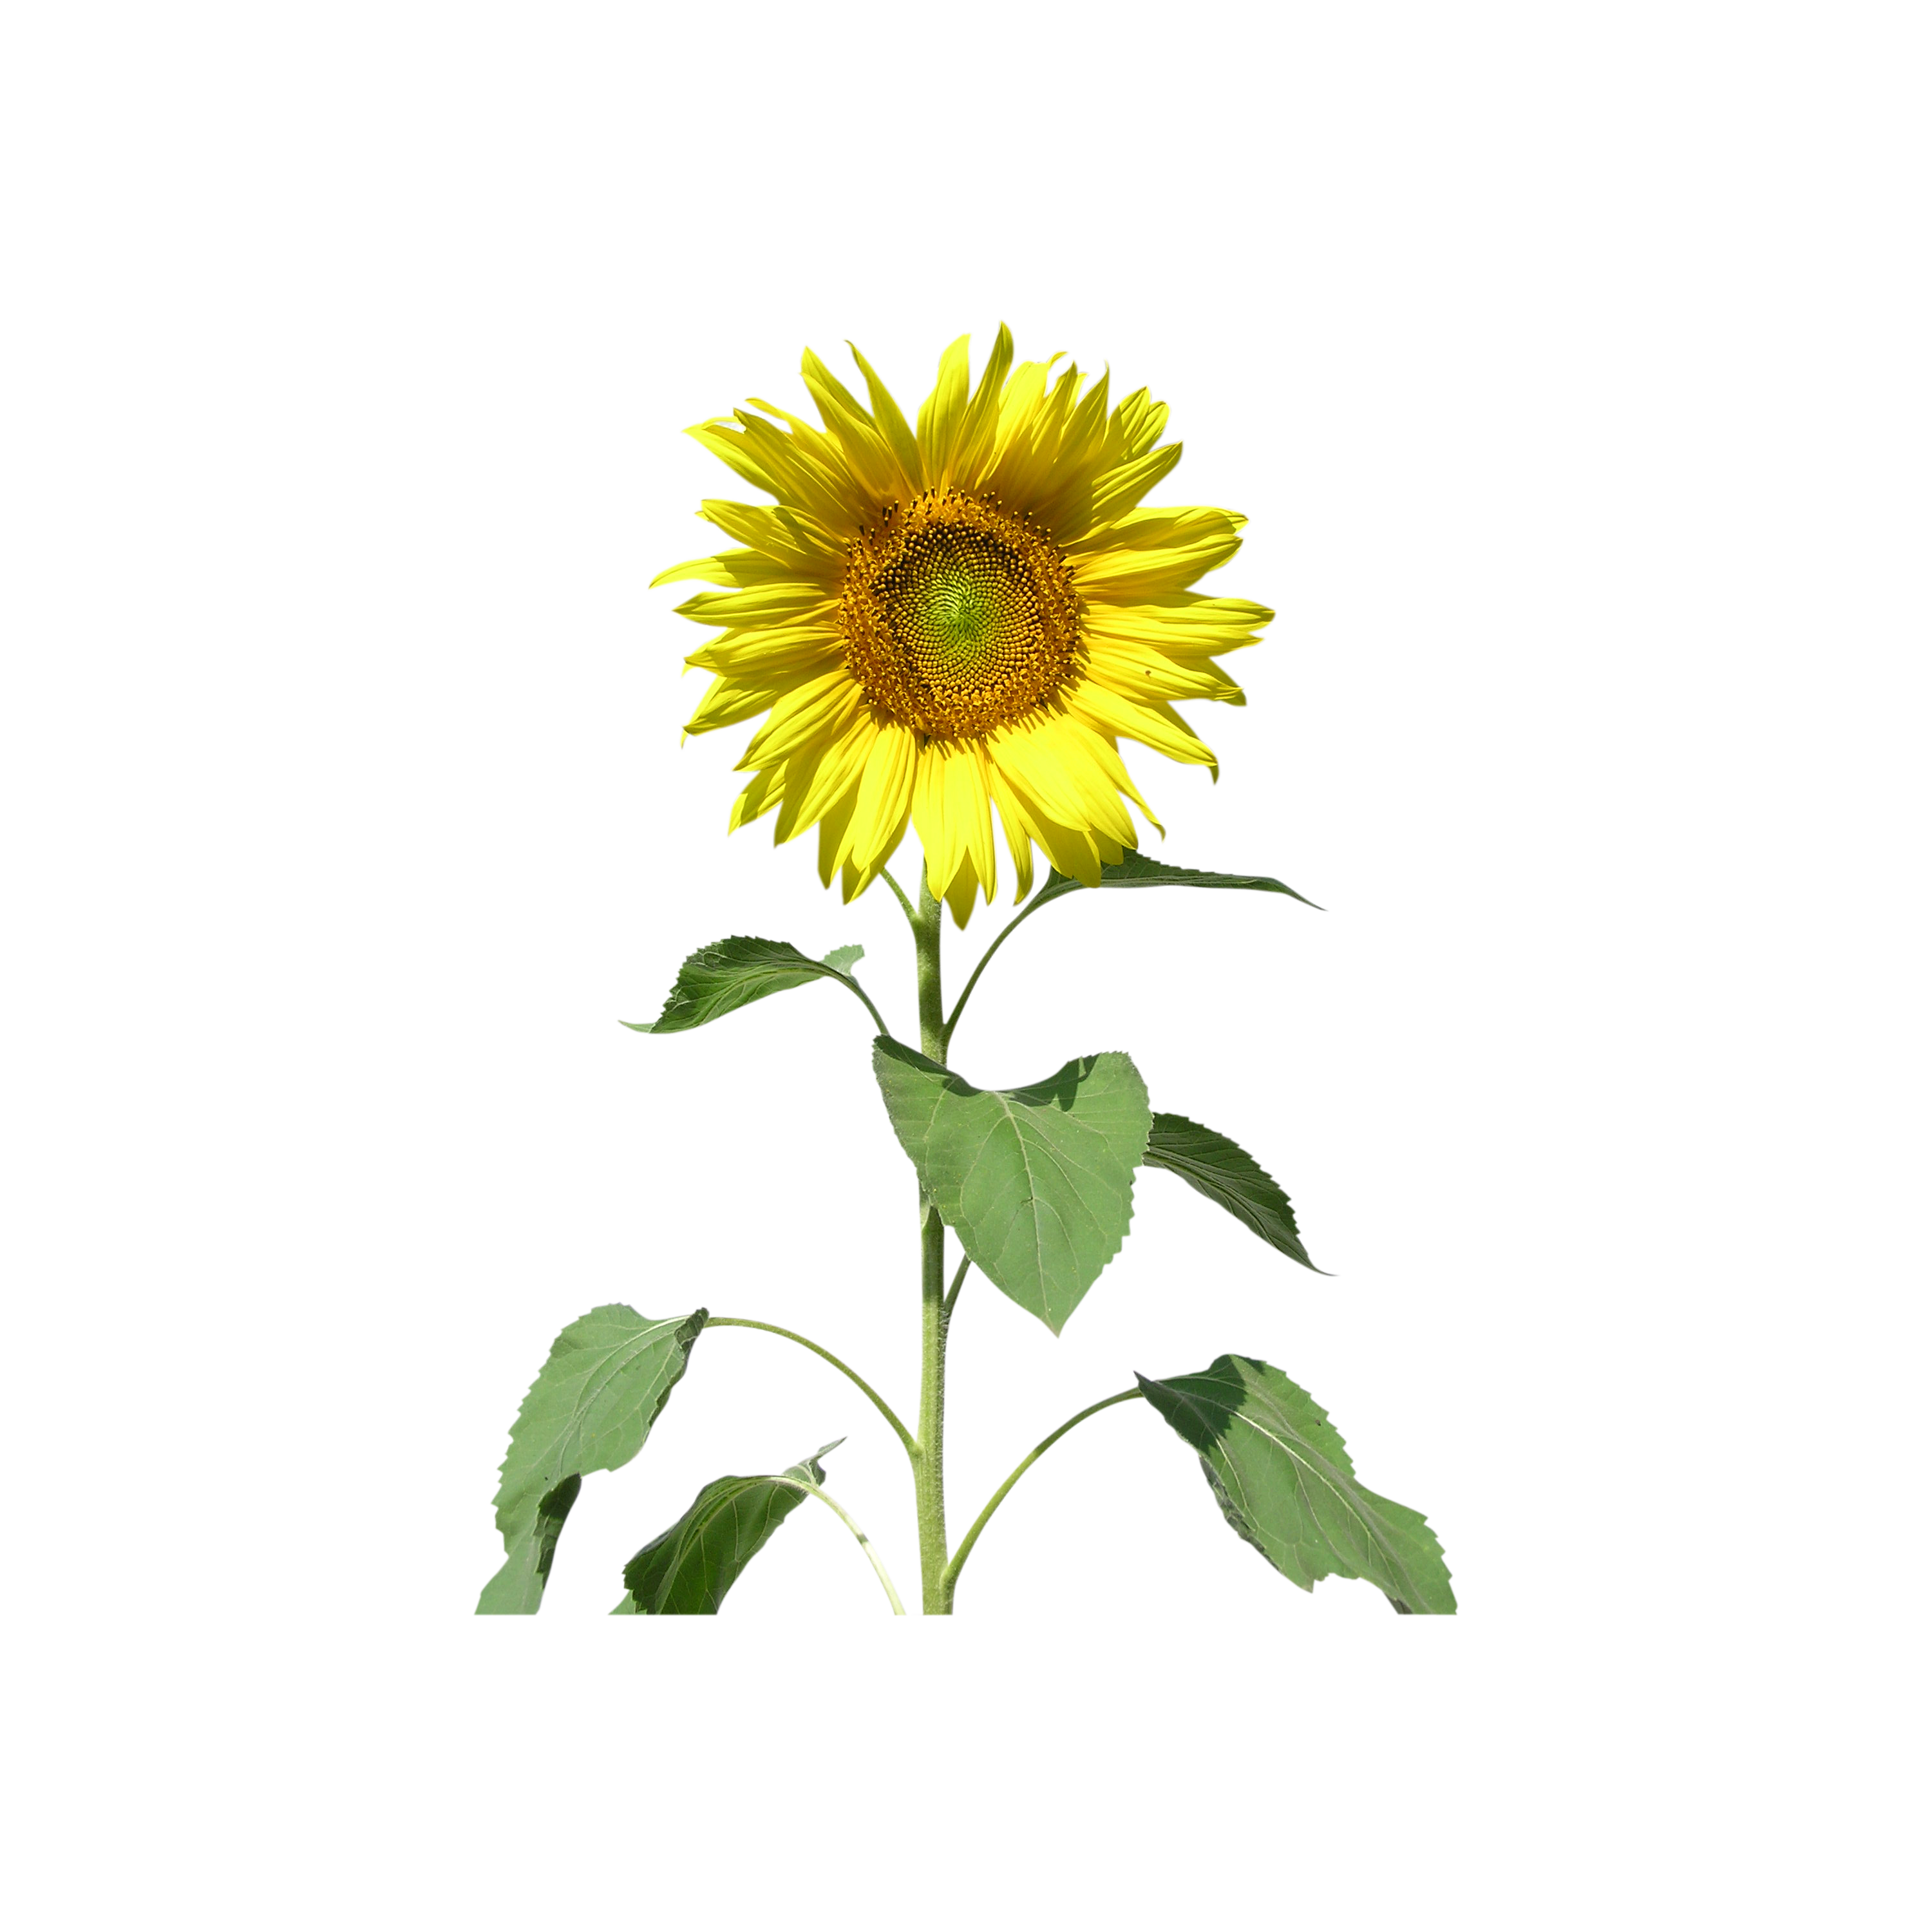 Sunflower Transparent Clipart